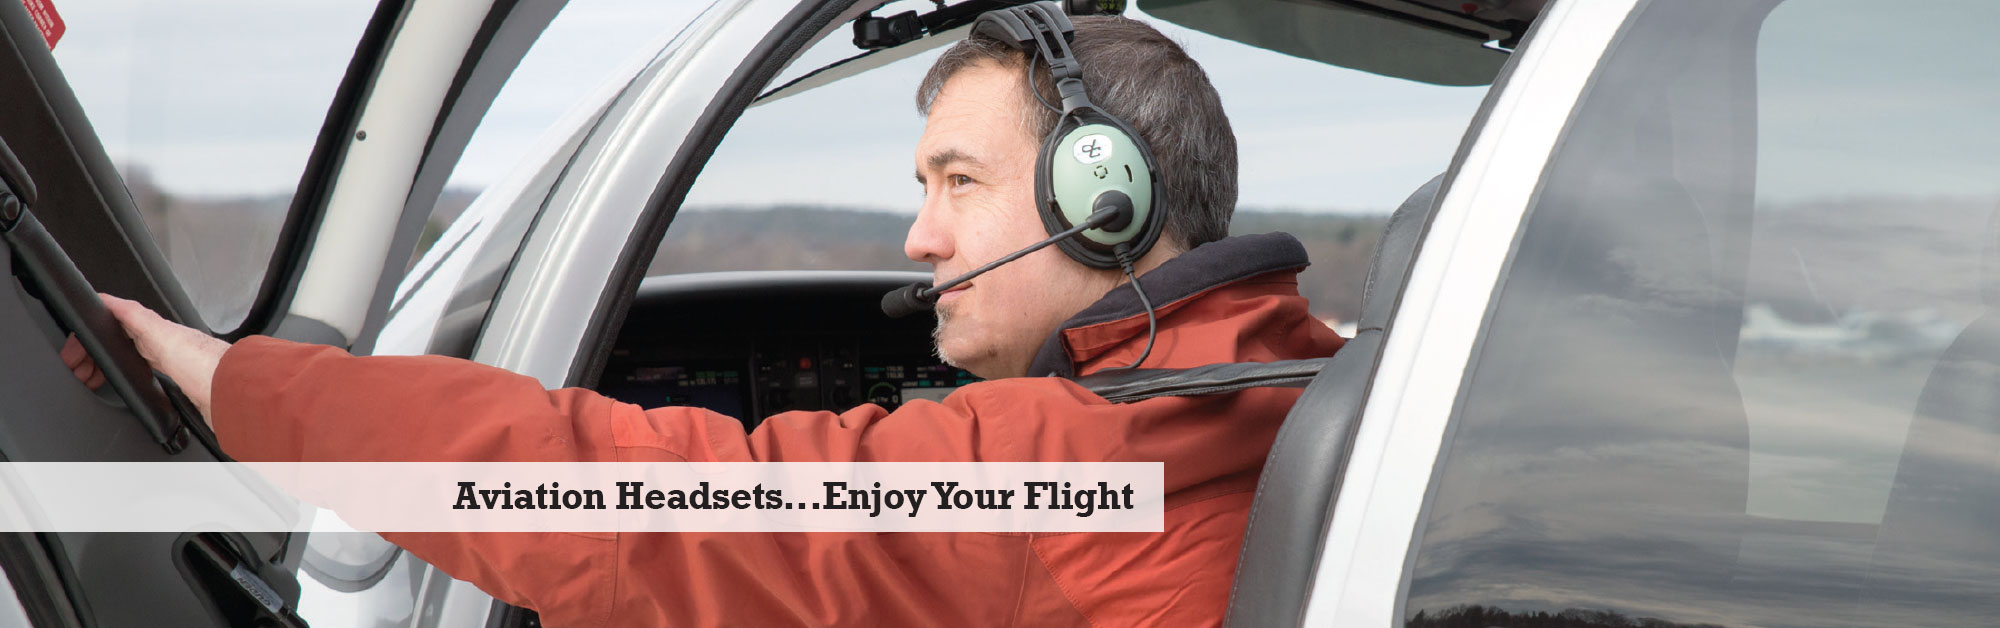 Aviation Headsets...Enjoy Your Fllight